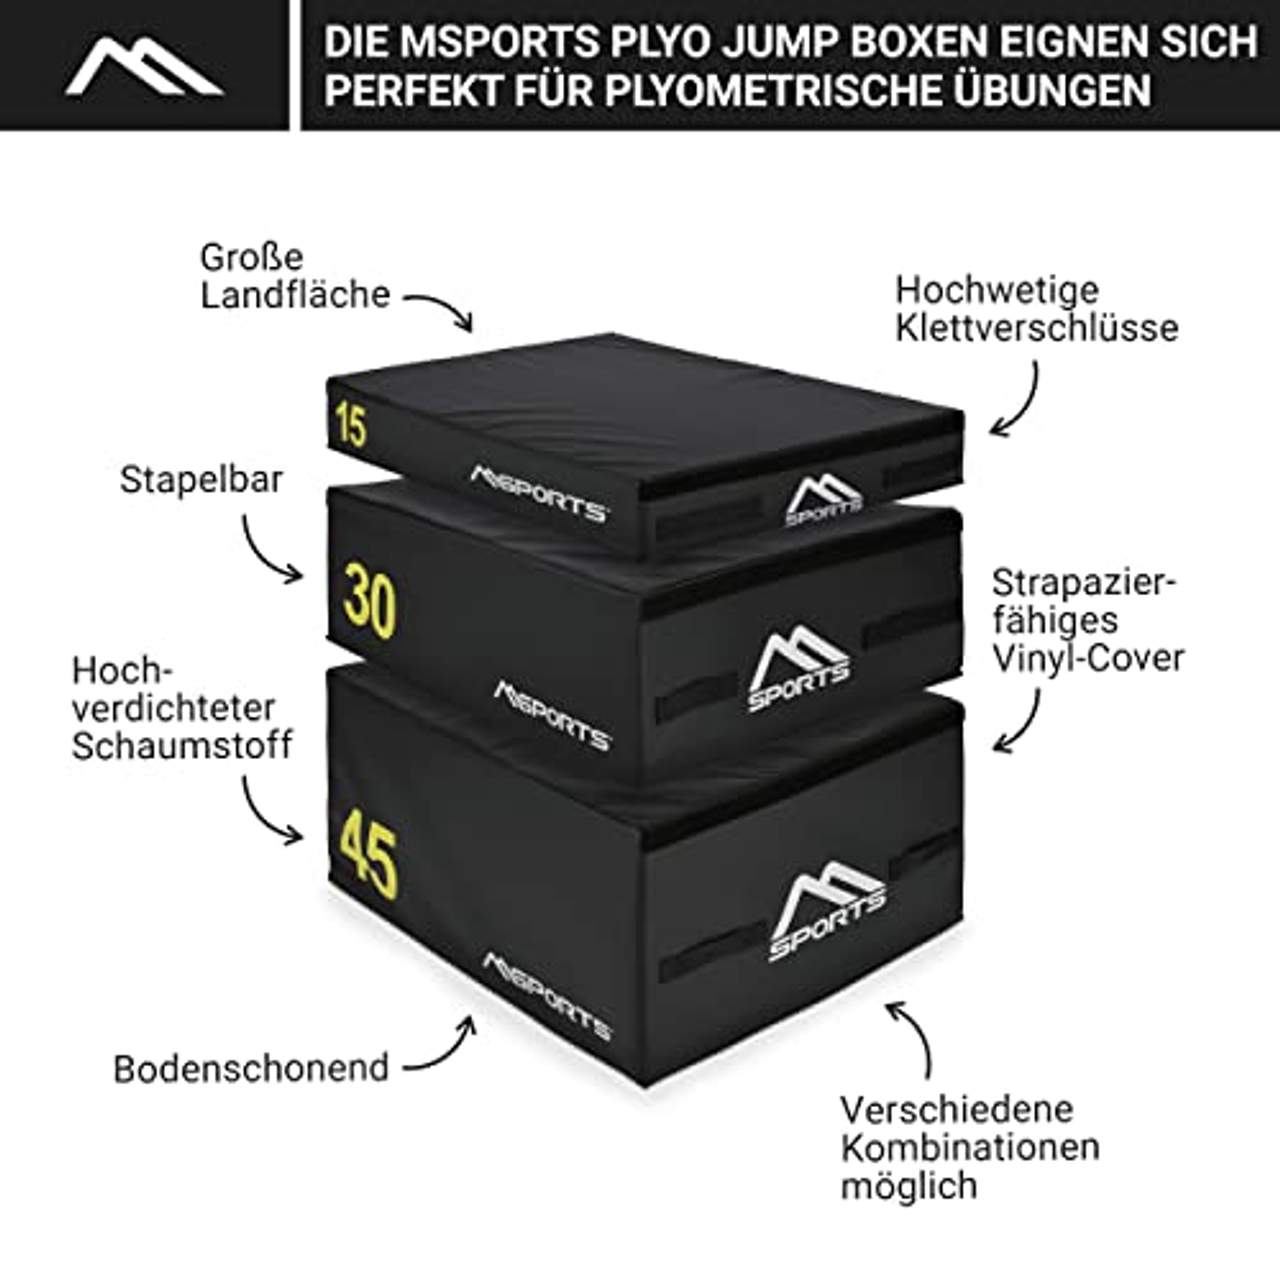 MSPORTS Plyo Box Professional 3-teilig